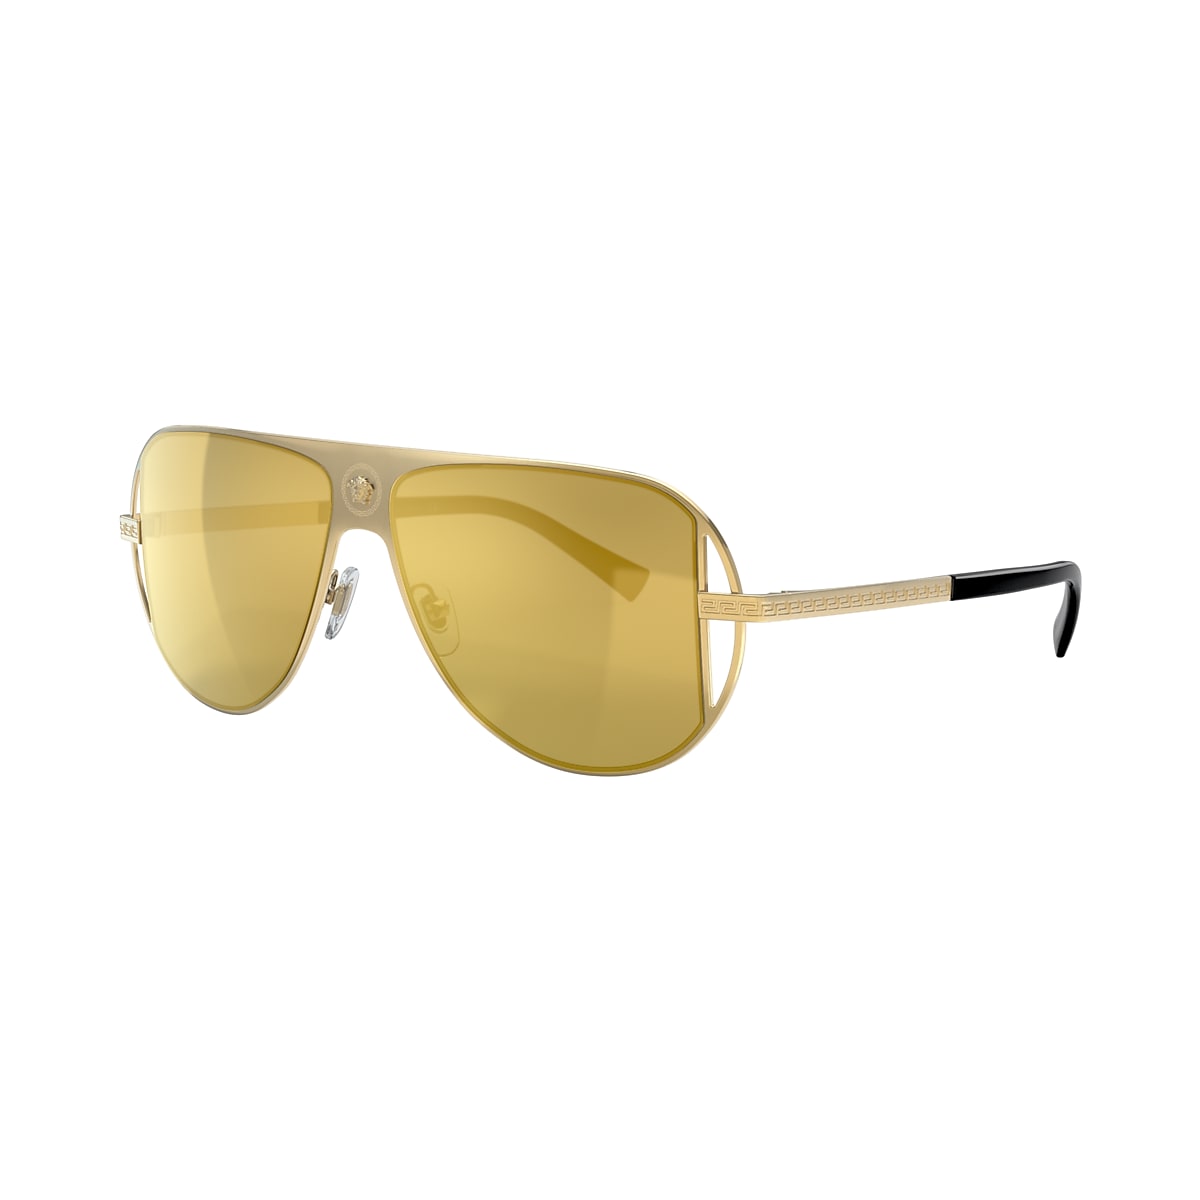 VERSACE VE2212 Gold - Men Luxury Sunglasses, Brown Mirror Gold Lens